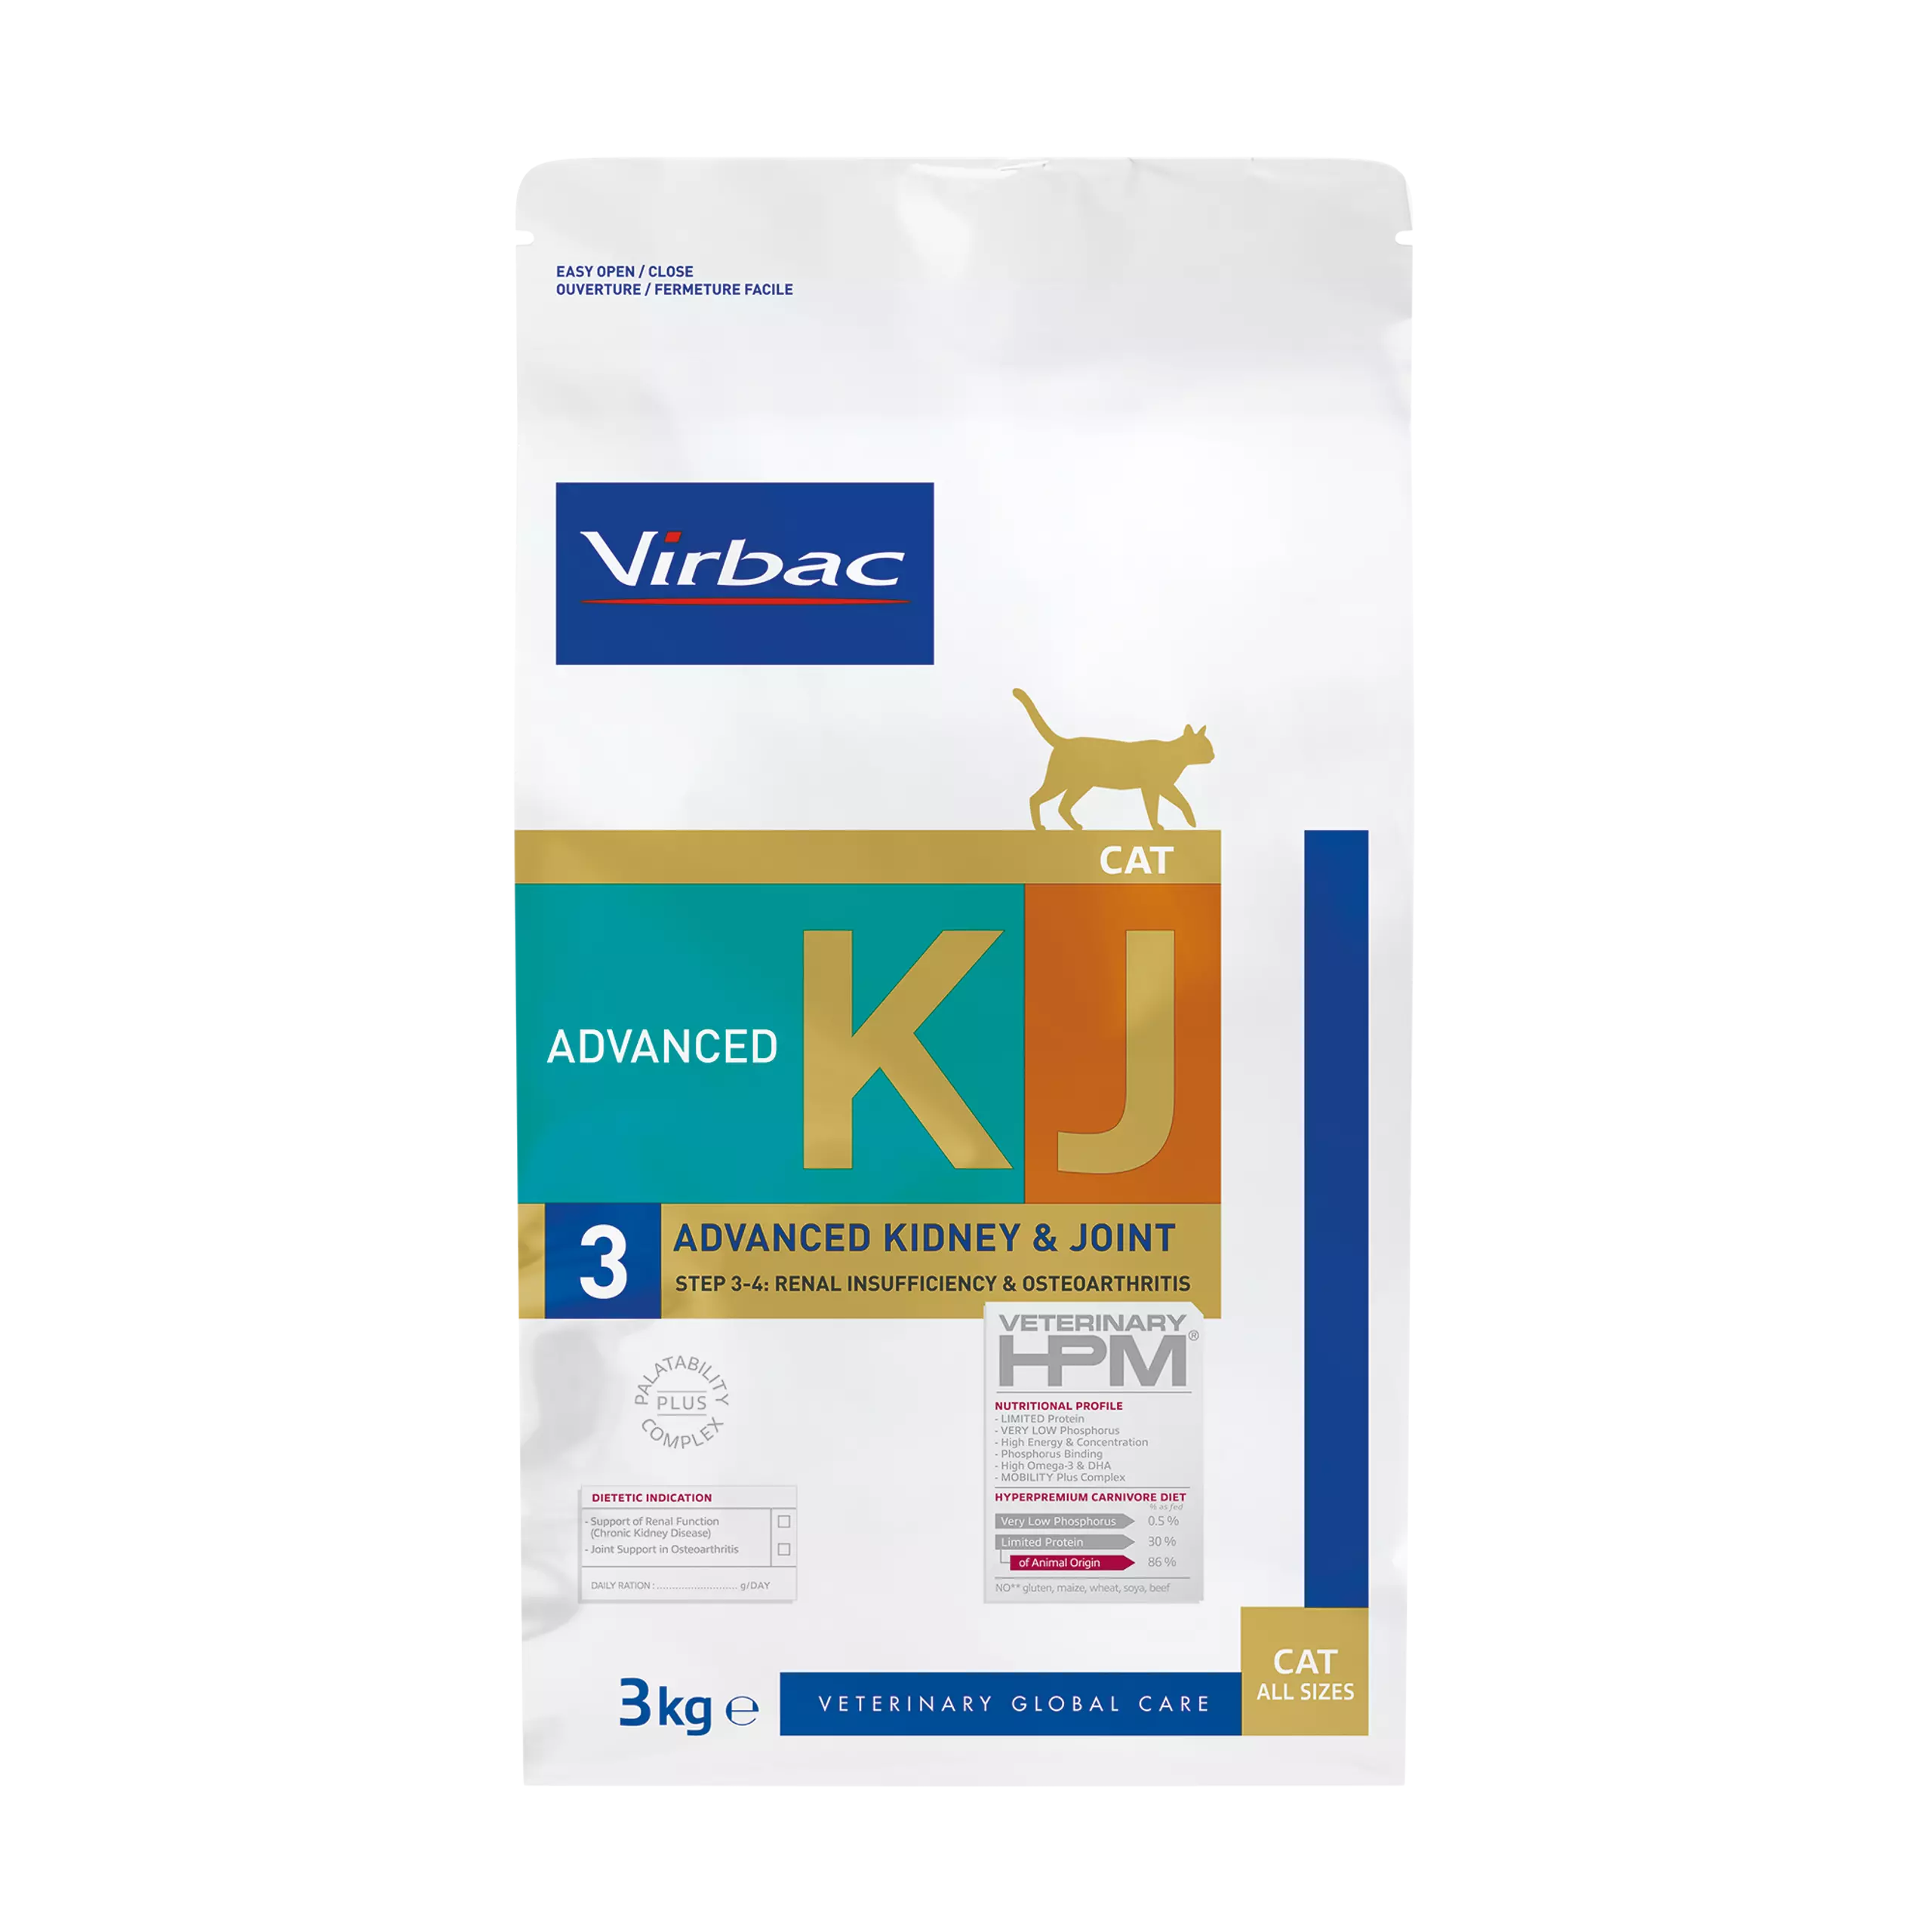 Virbac HPM Diet Cat Kidney & Joint 3 Advanced 400g